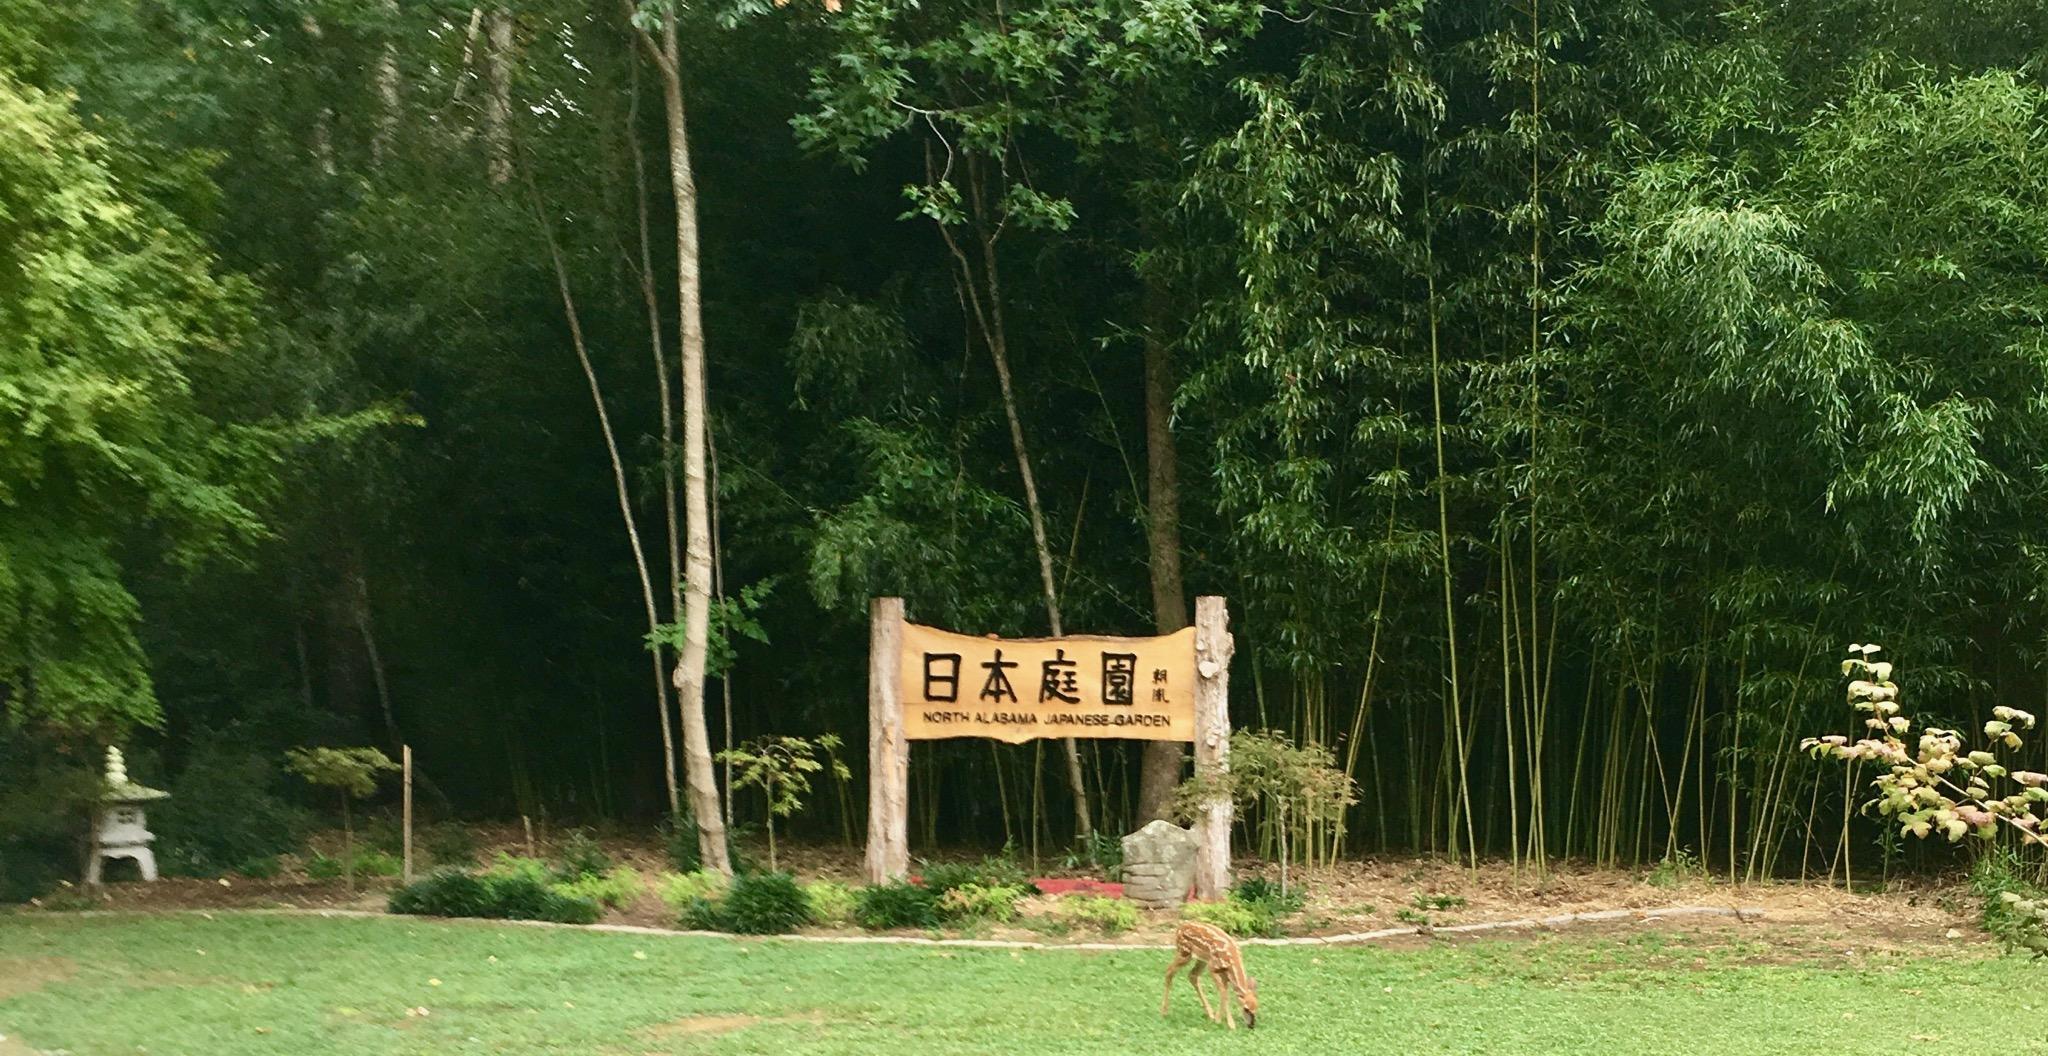 Japanese Garden Sign w/ Fawn